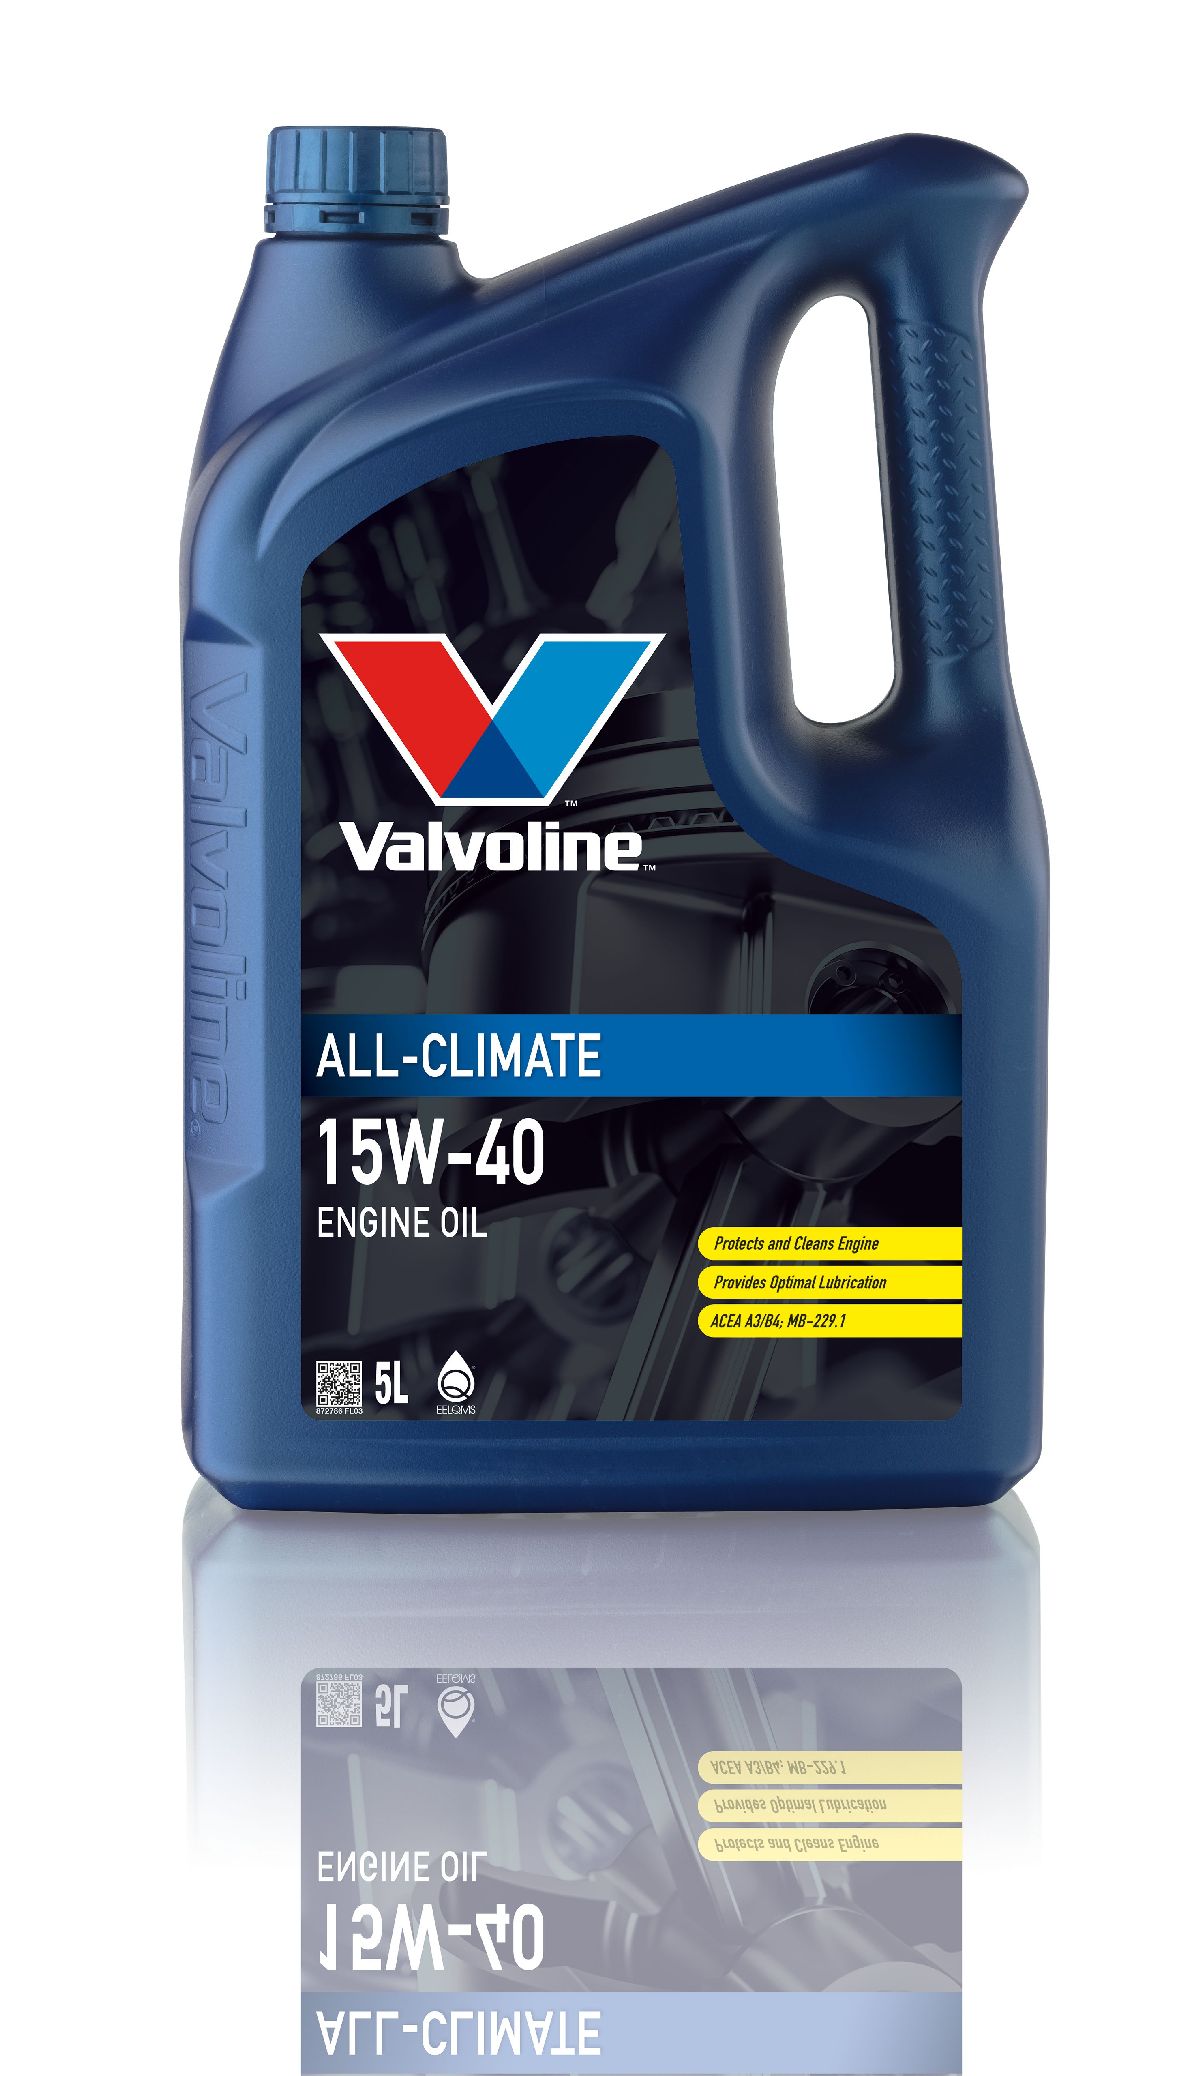 Valvoline All-Climate 15W-40